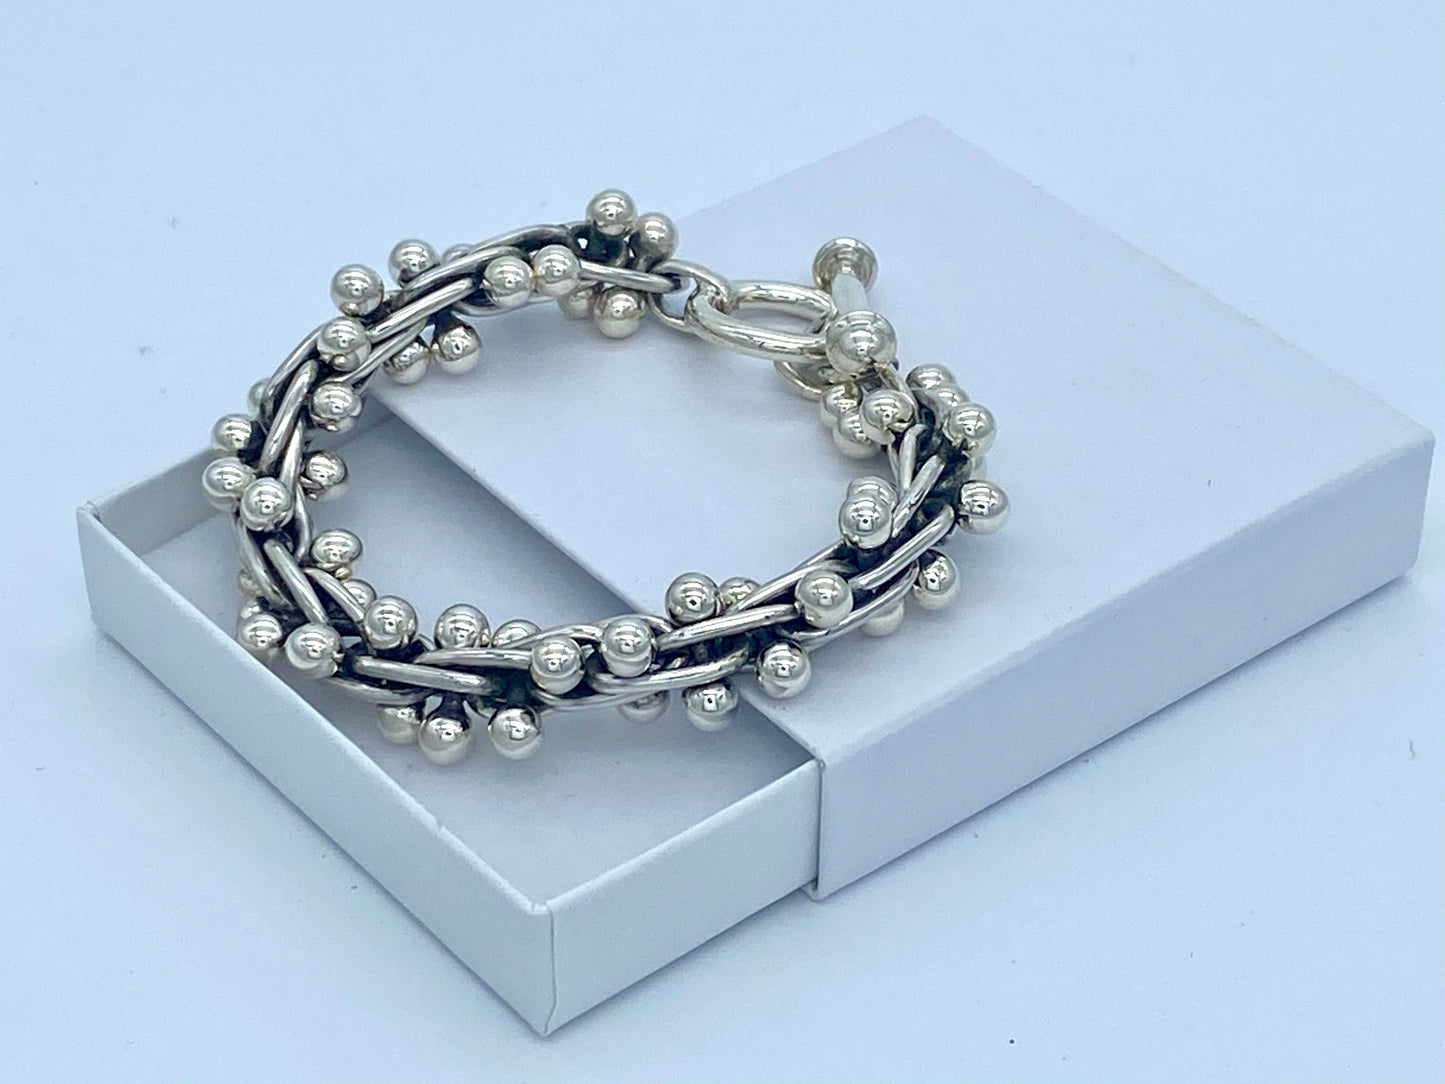 Jewellery Set - Graduated Peppercorn Necklace and Bracelet